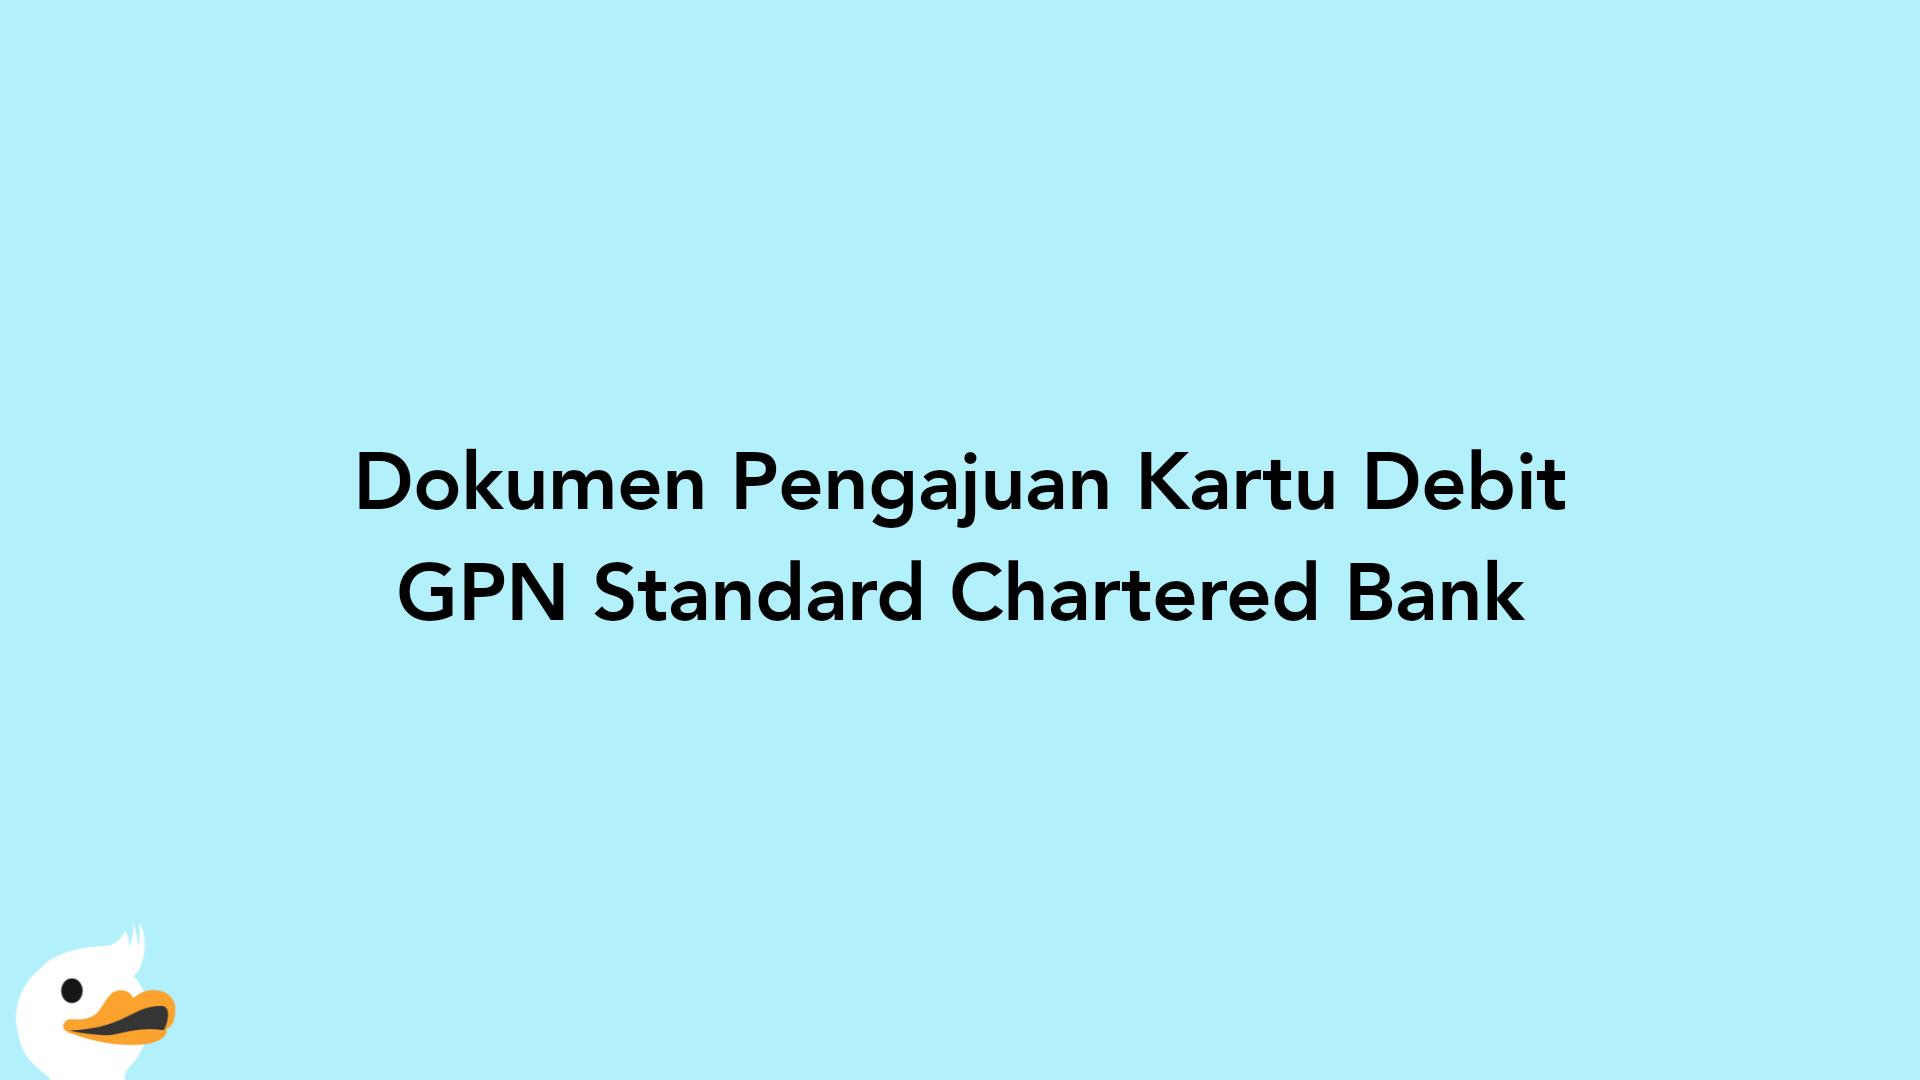 Dokumen Pengajuan Kartu Debit GPN Standard Chartered Bank